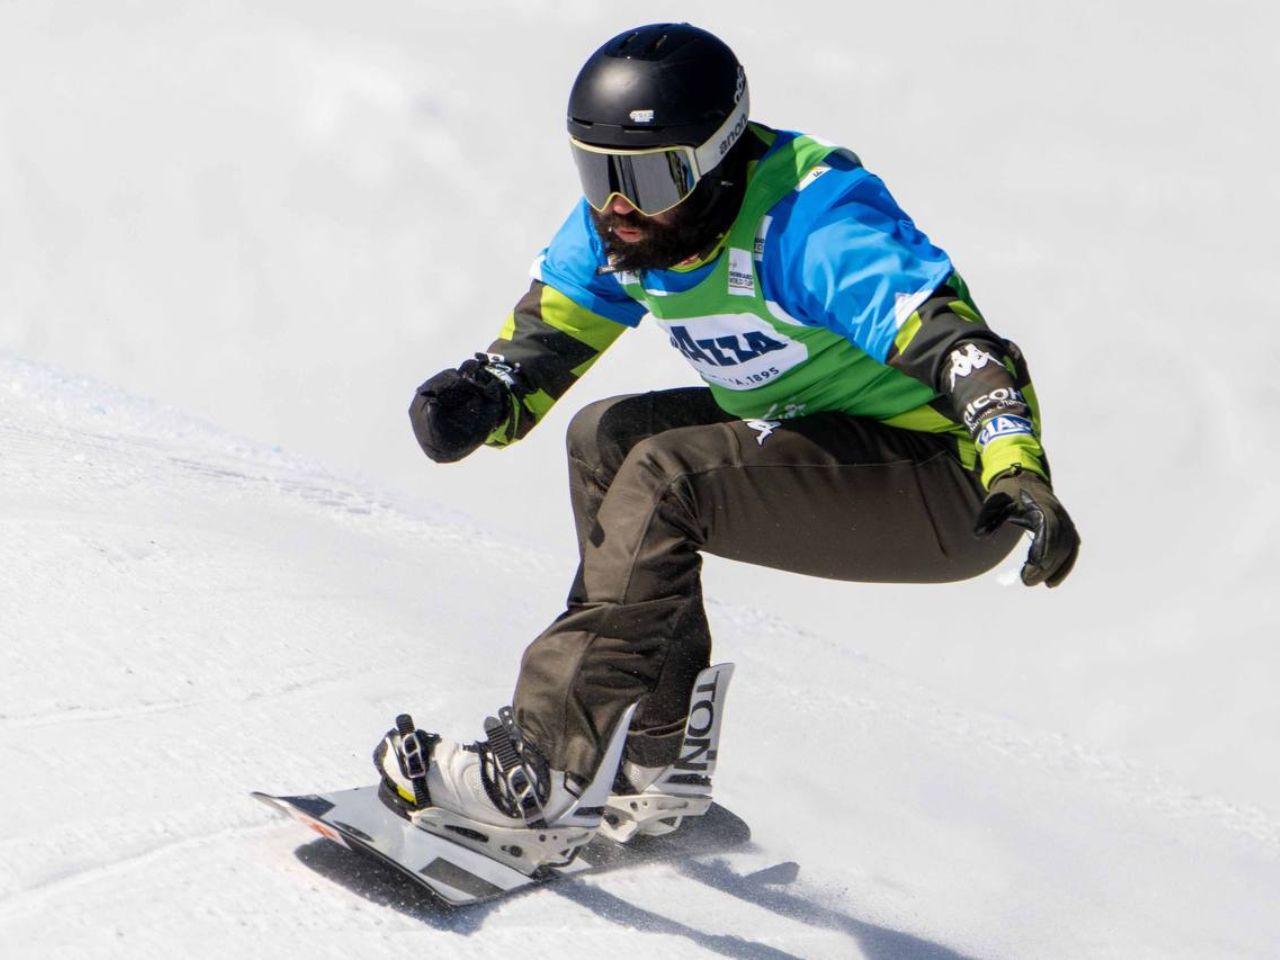 Ad XMasters, lo sport paralimpico sulla neve: lo snowboarder Riccardo Cardani si racconta